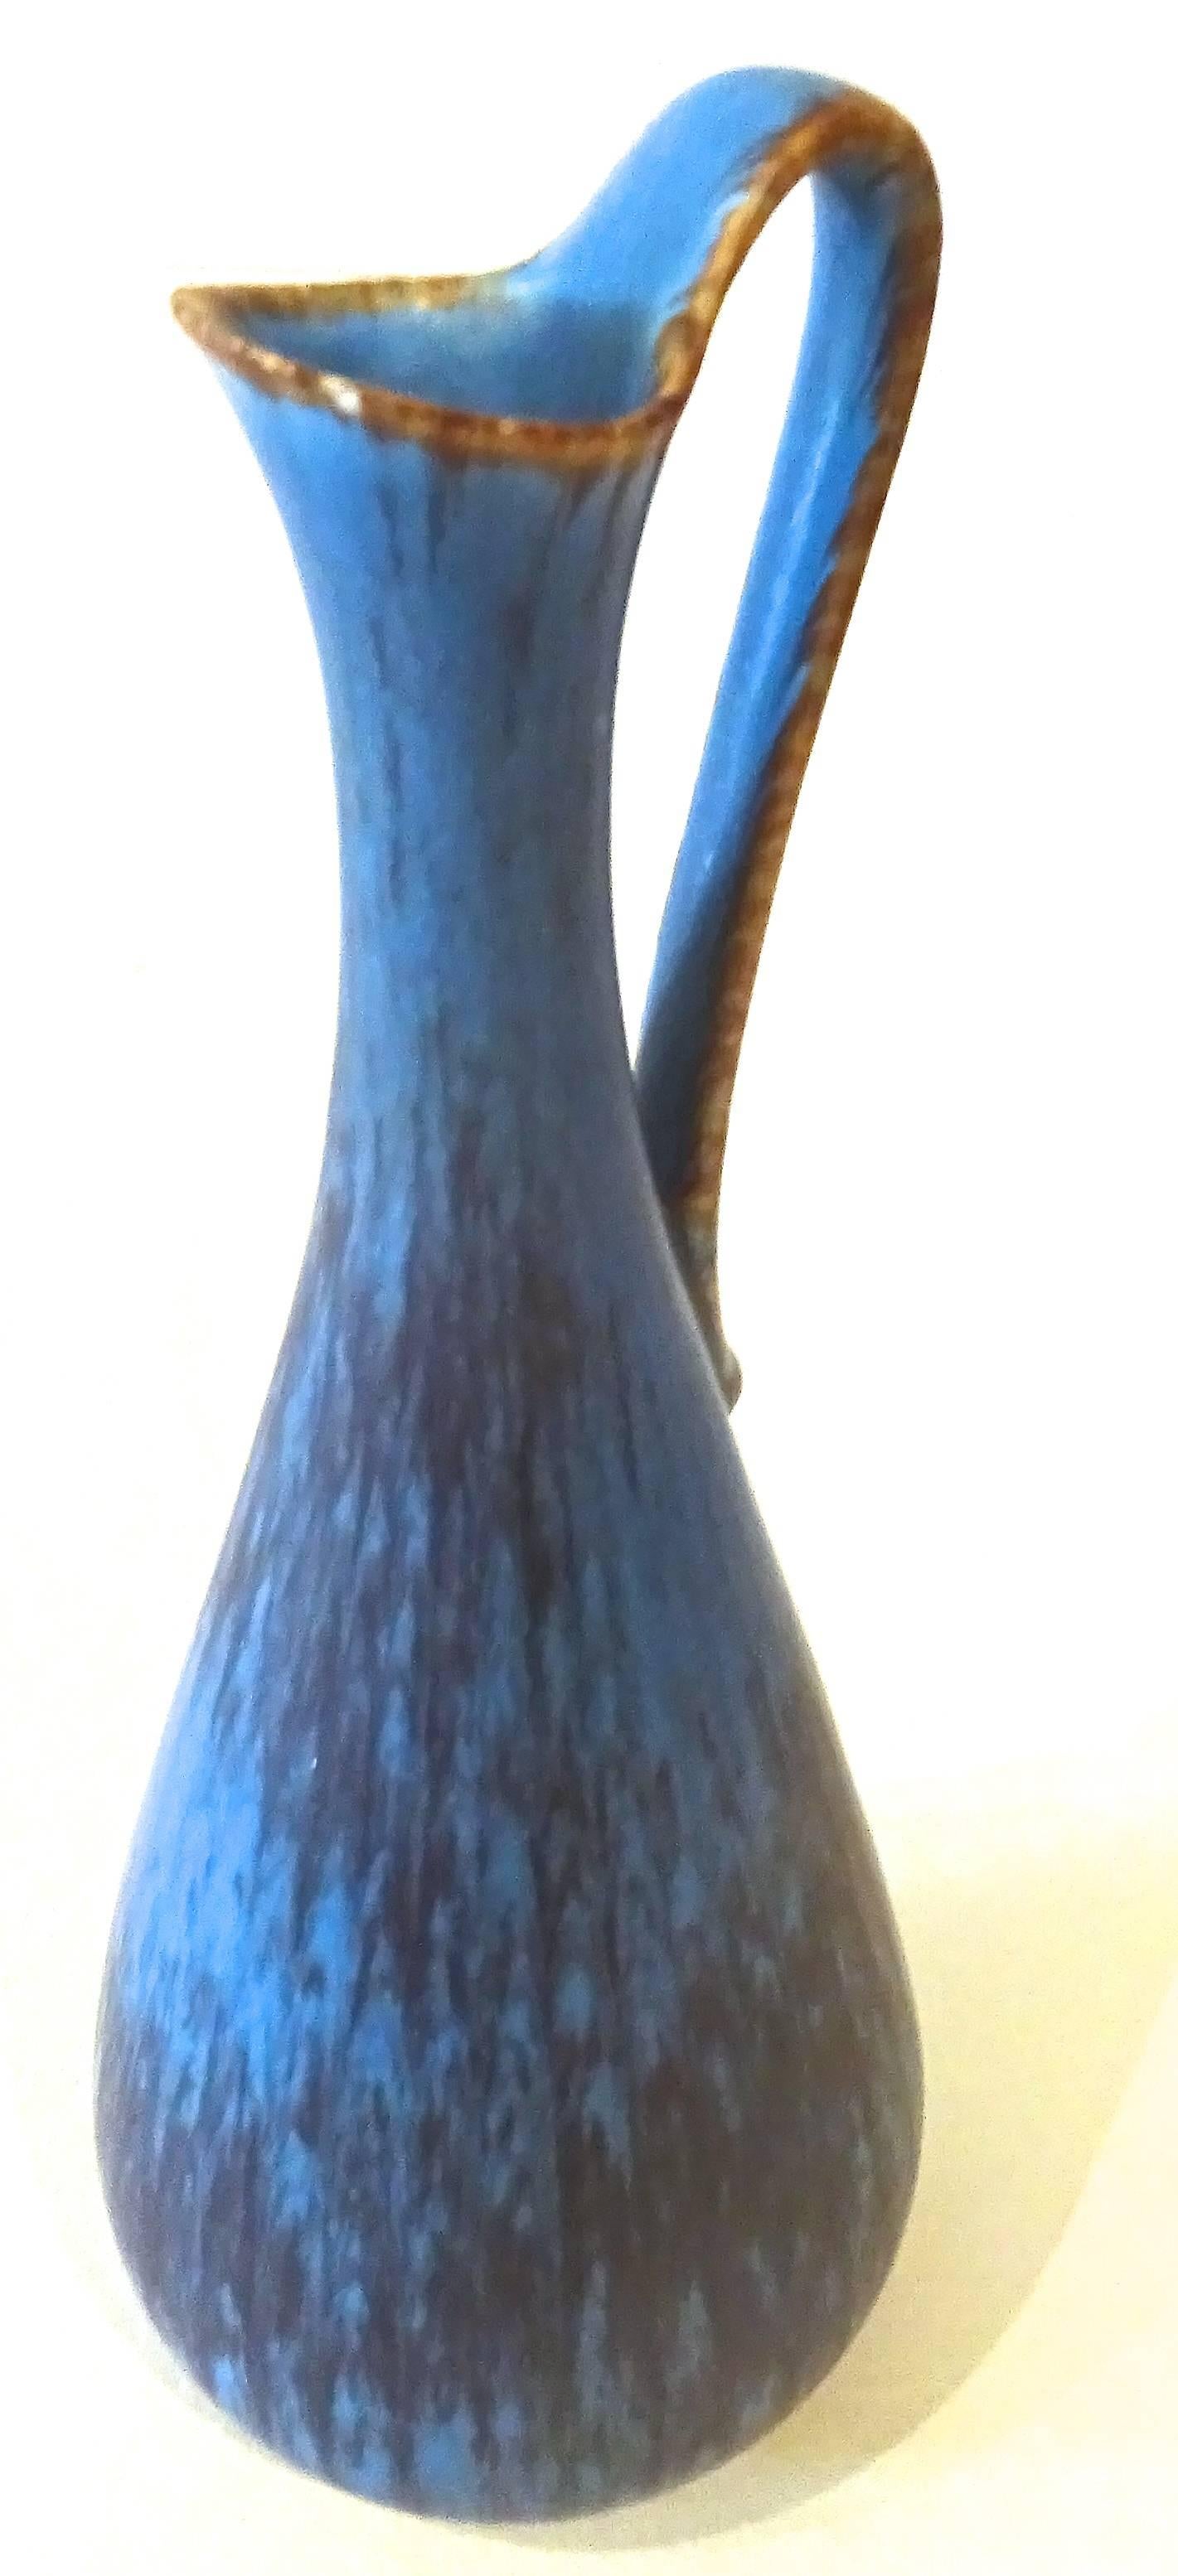 1950s Gunnar Nylund for Rorstrand Swedish Modern art pottery vessel.